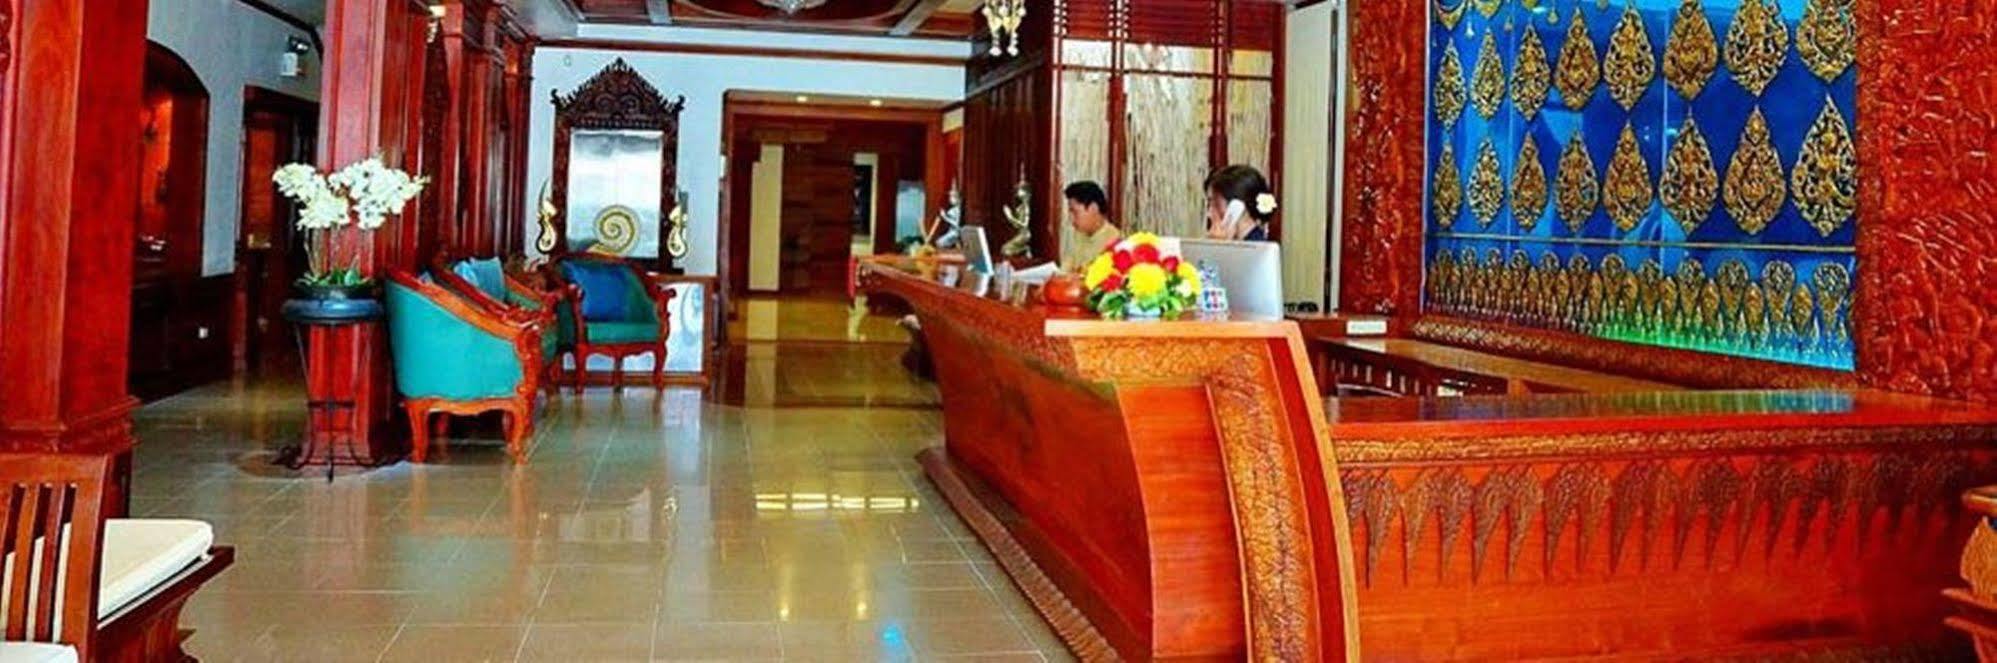 Chanthapanya Hotel Vientiane Exterior photo